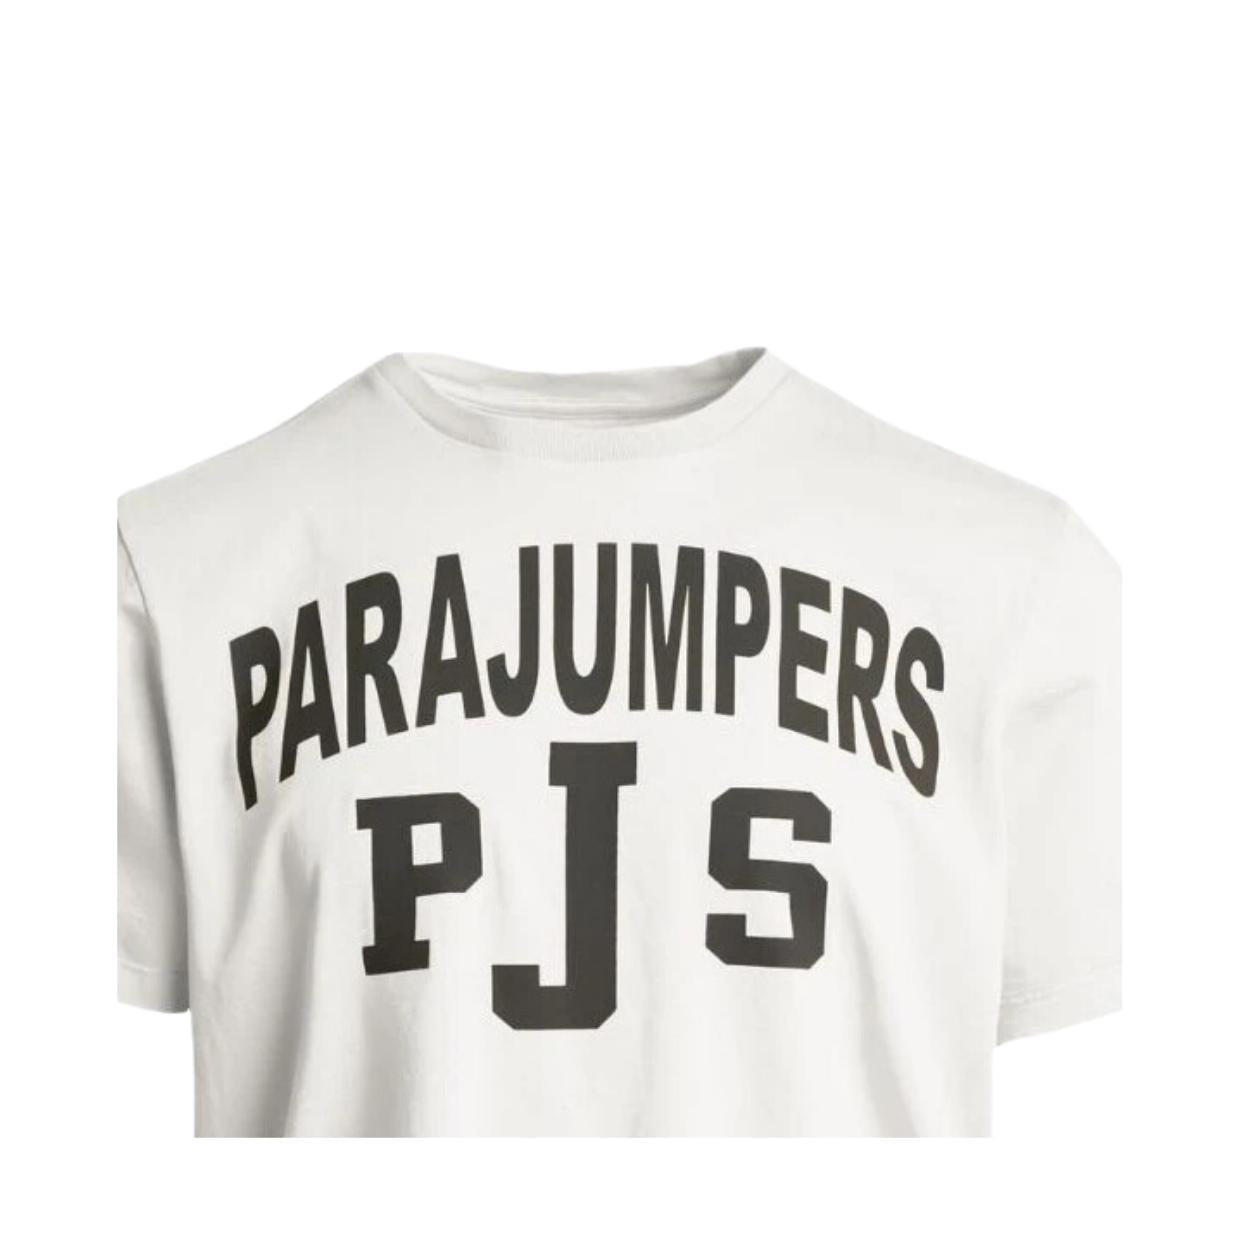 Parajumpers Logo Trev White T-Shirt